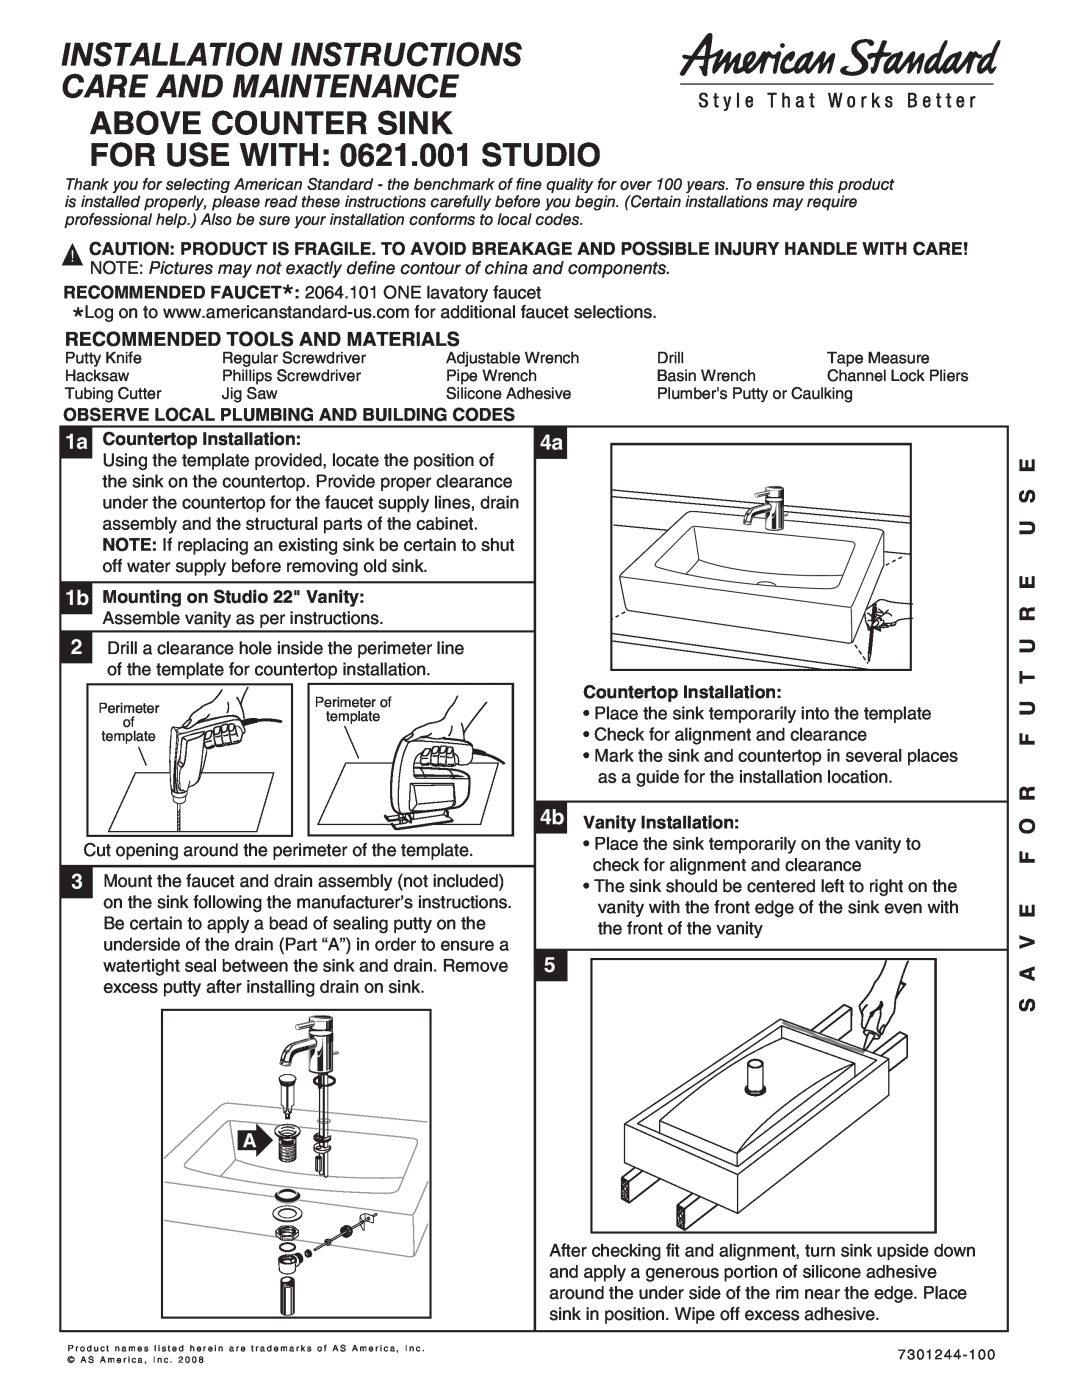 American Standard 0621.001 STUDIO installation instructions Installation Instructions Care And Maintenance, T U R E U S E 